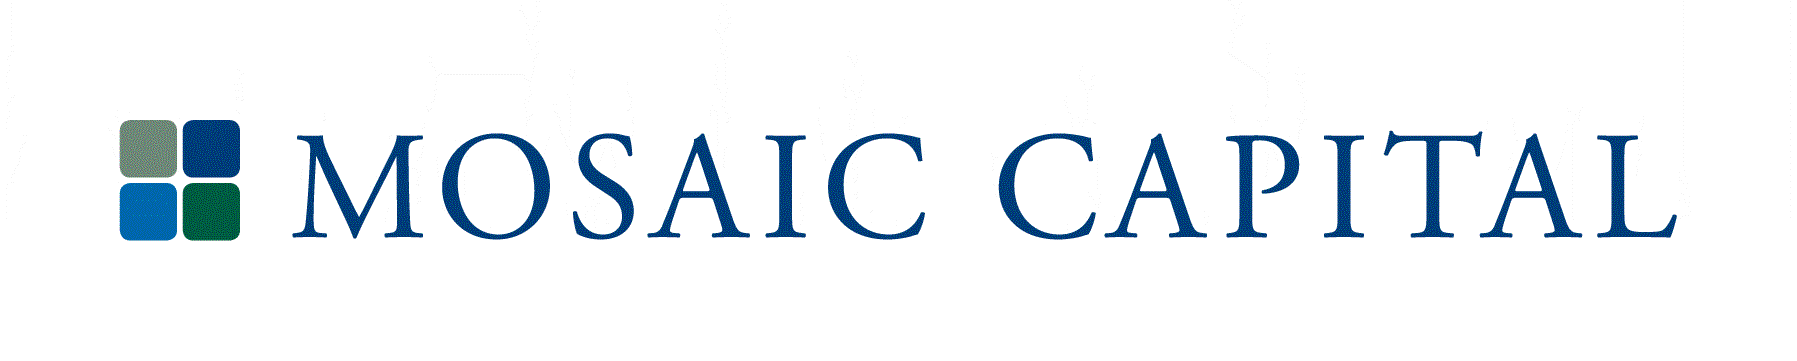 Mosaic Capital logo